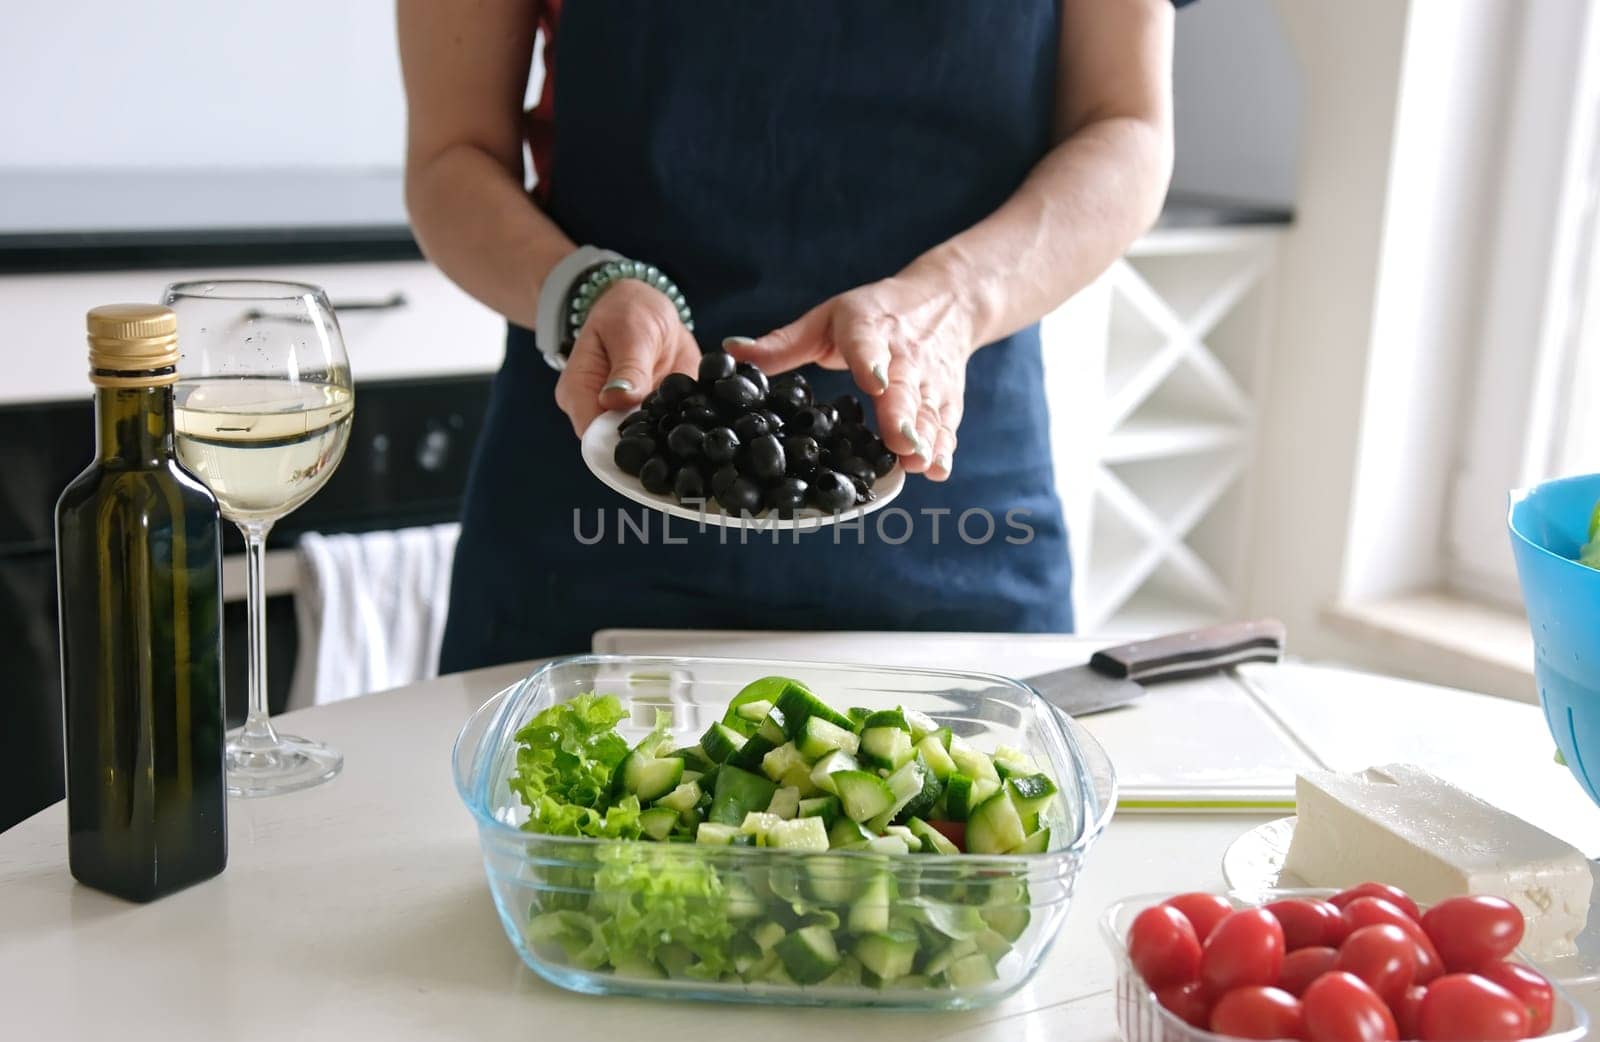 Woman Prepares Greek Salad At Home by tan4ikk1